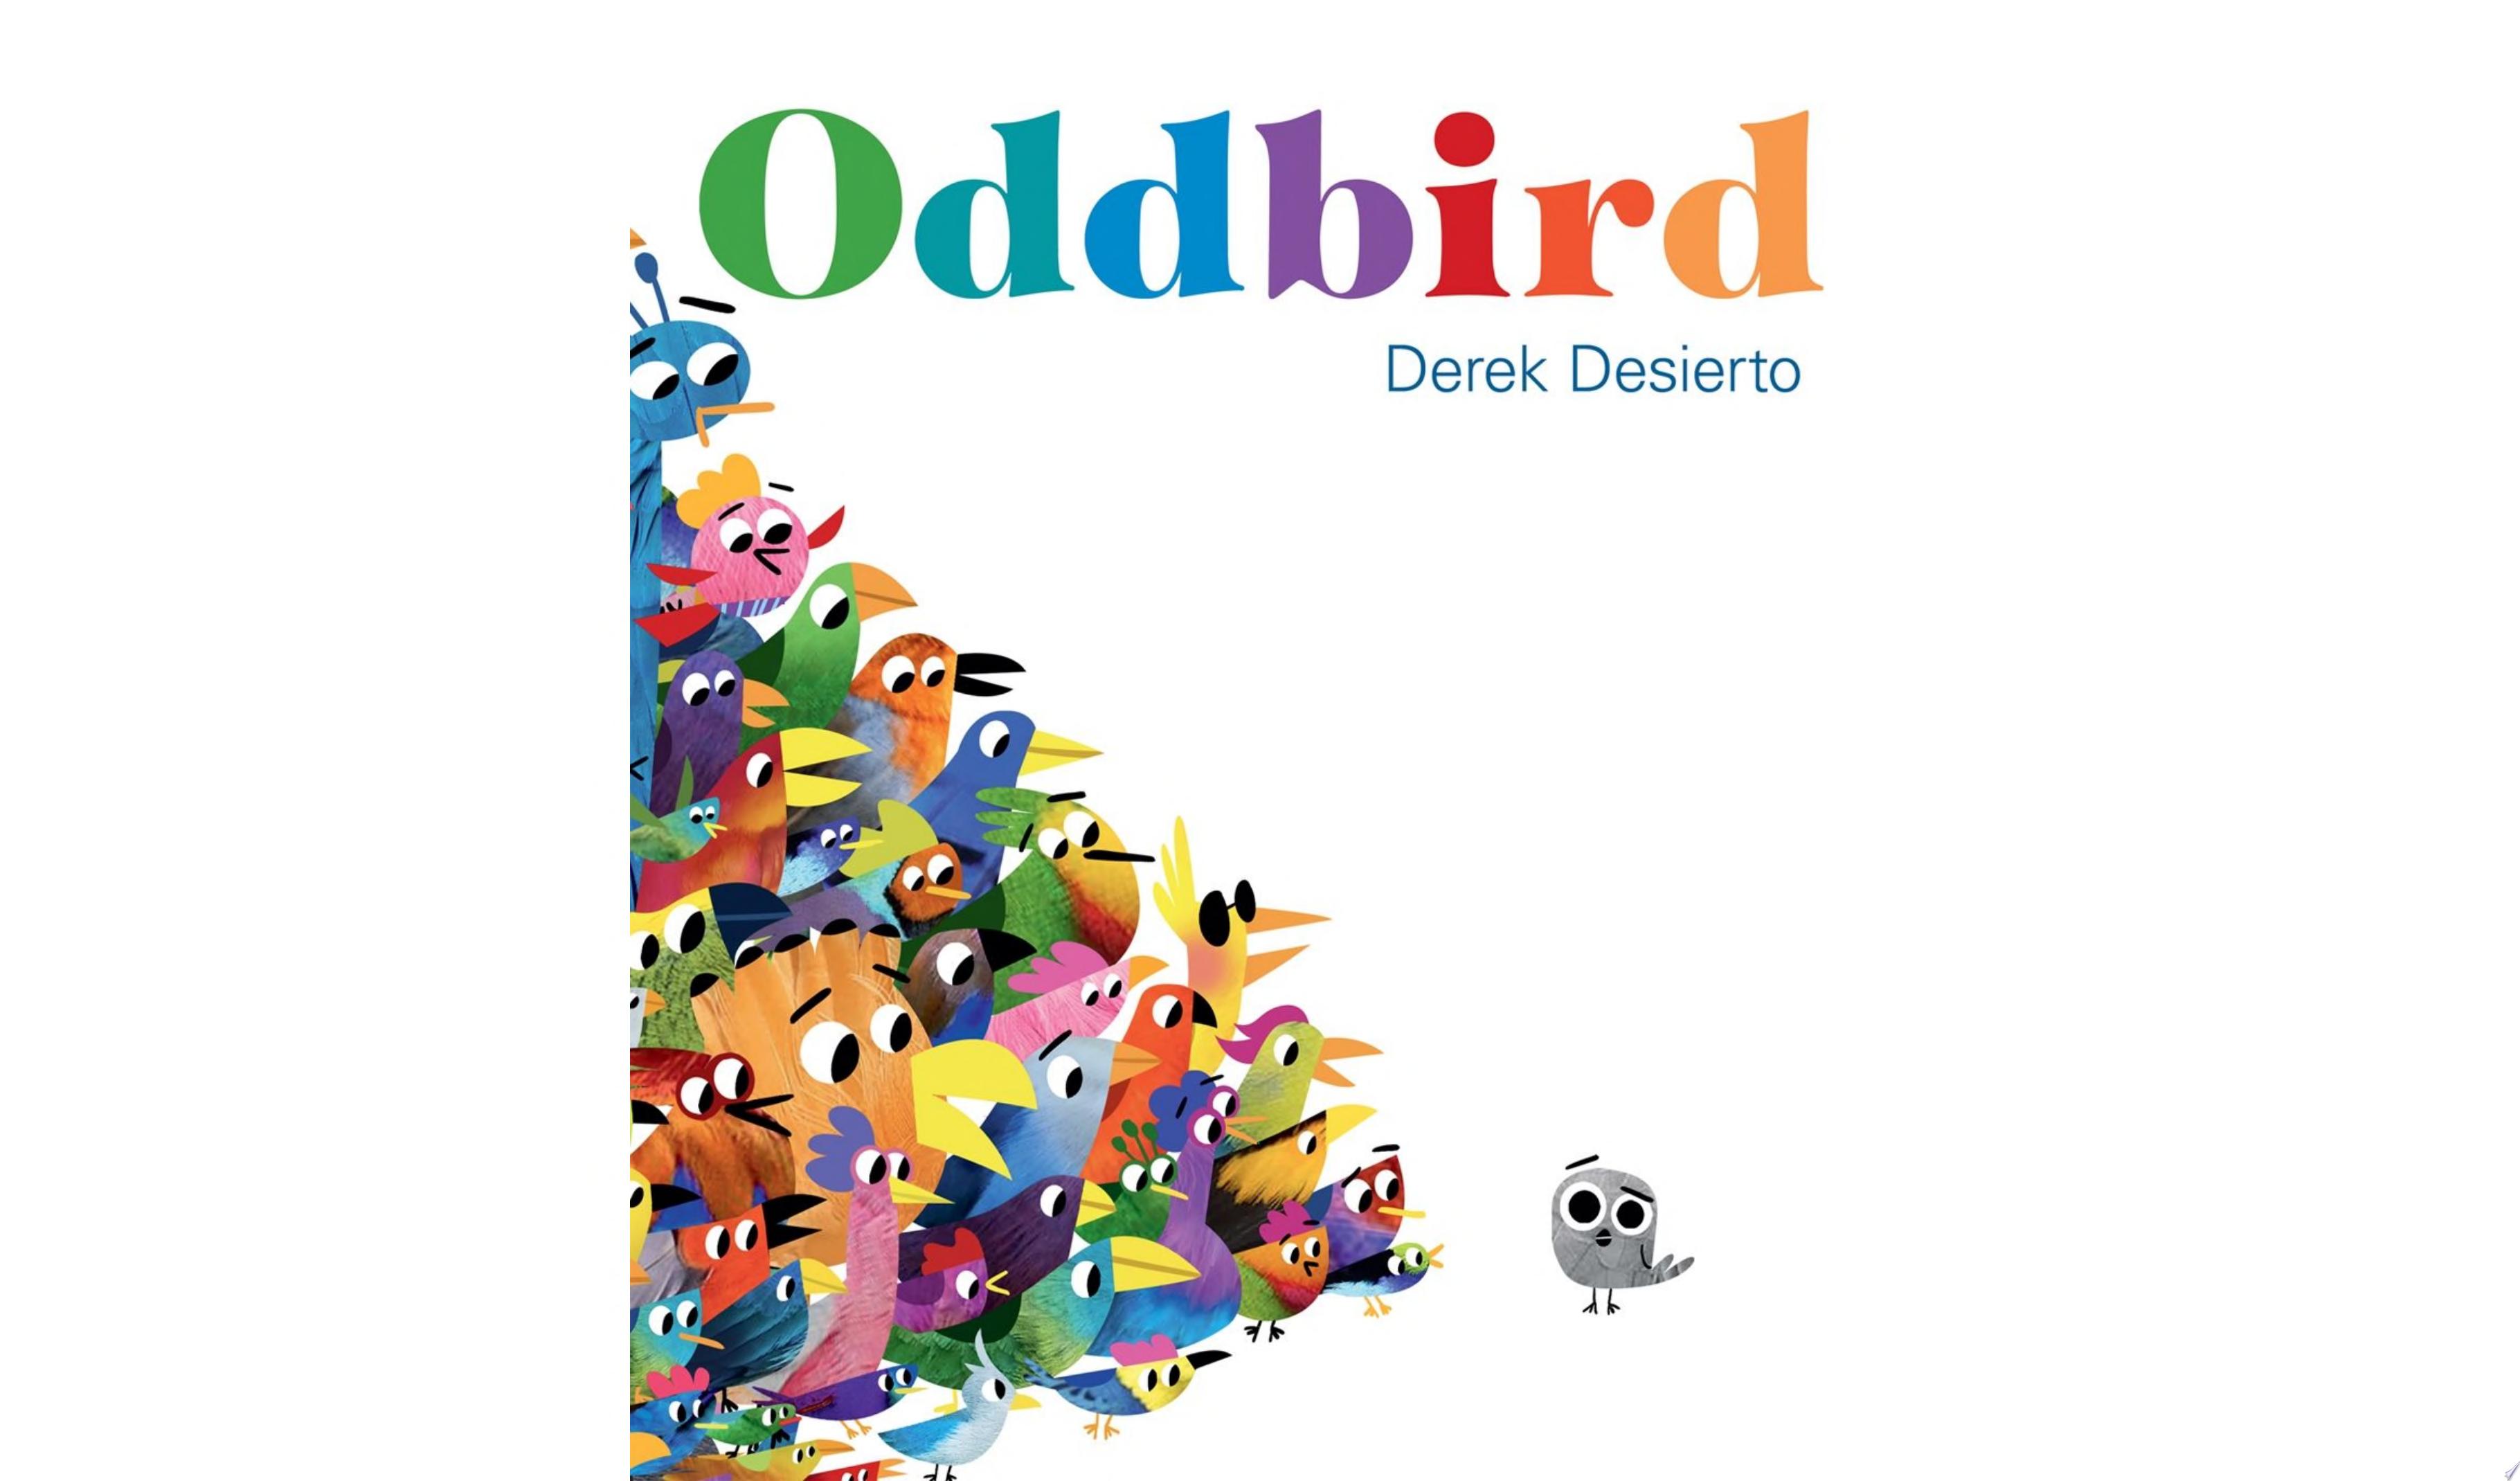 Image for "Oddbird"